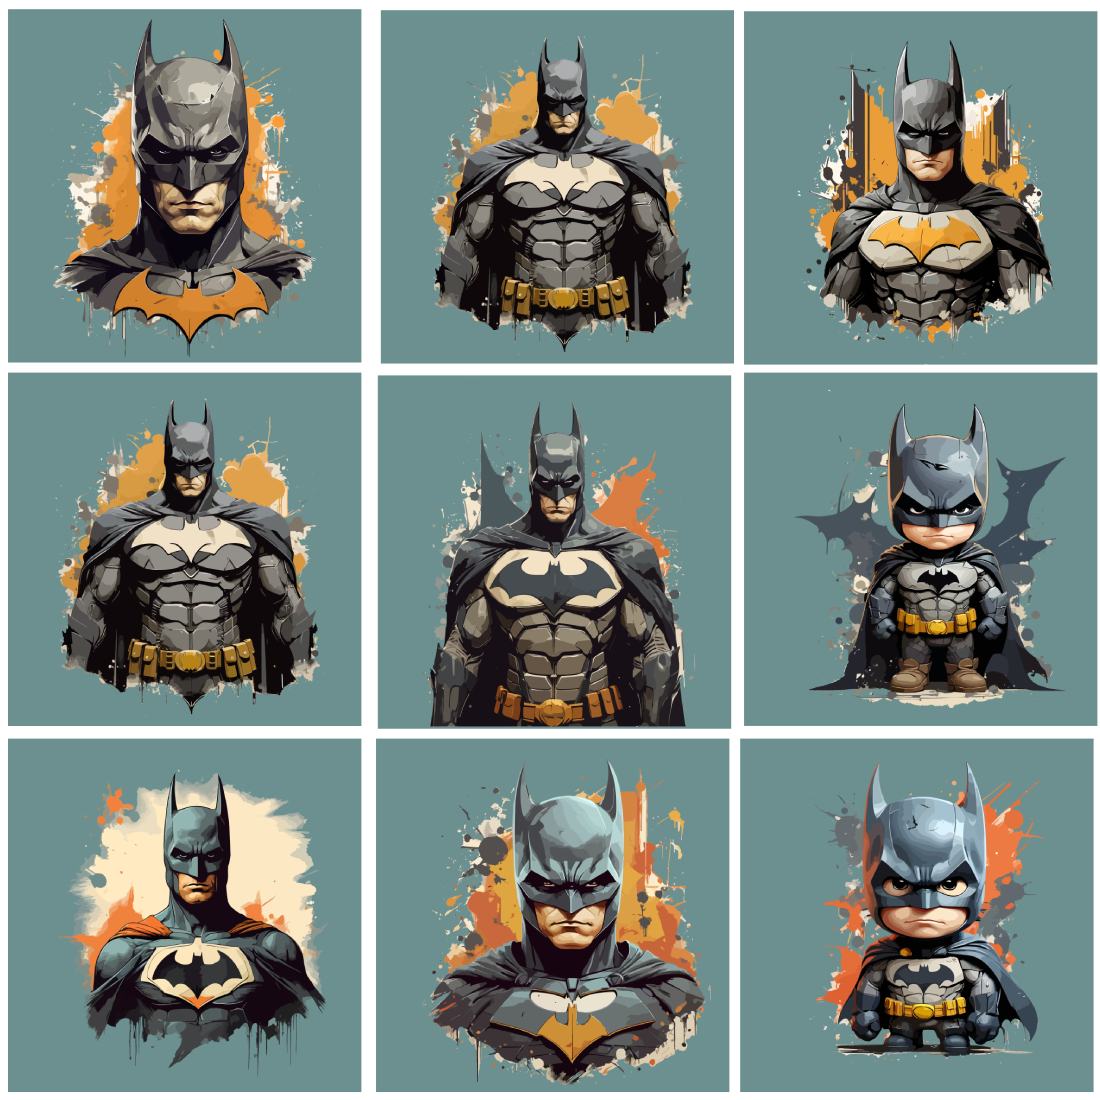 Batman Illustrations preview image.